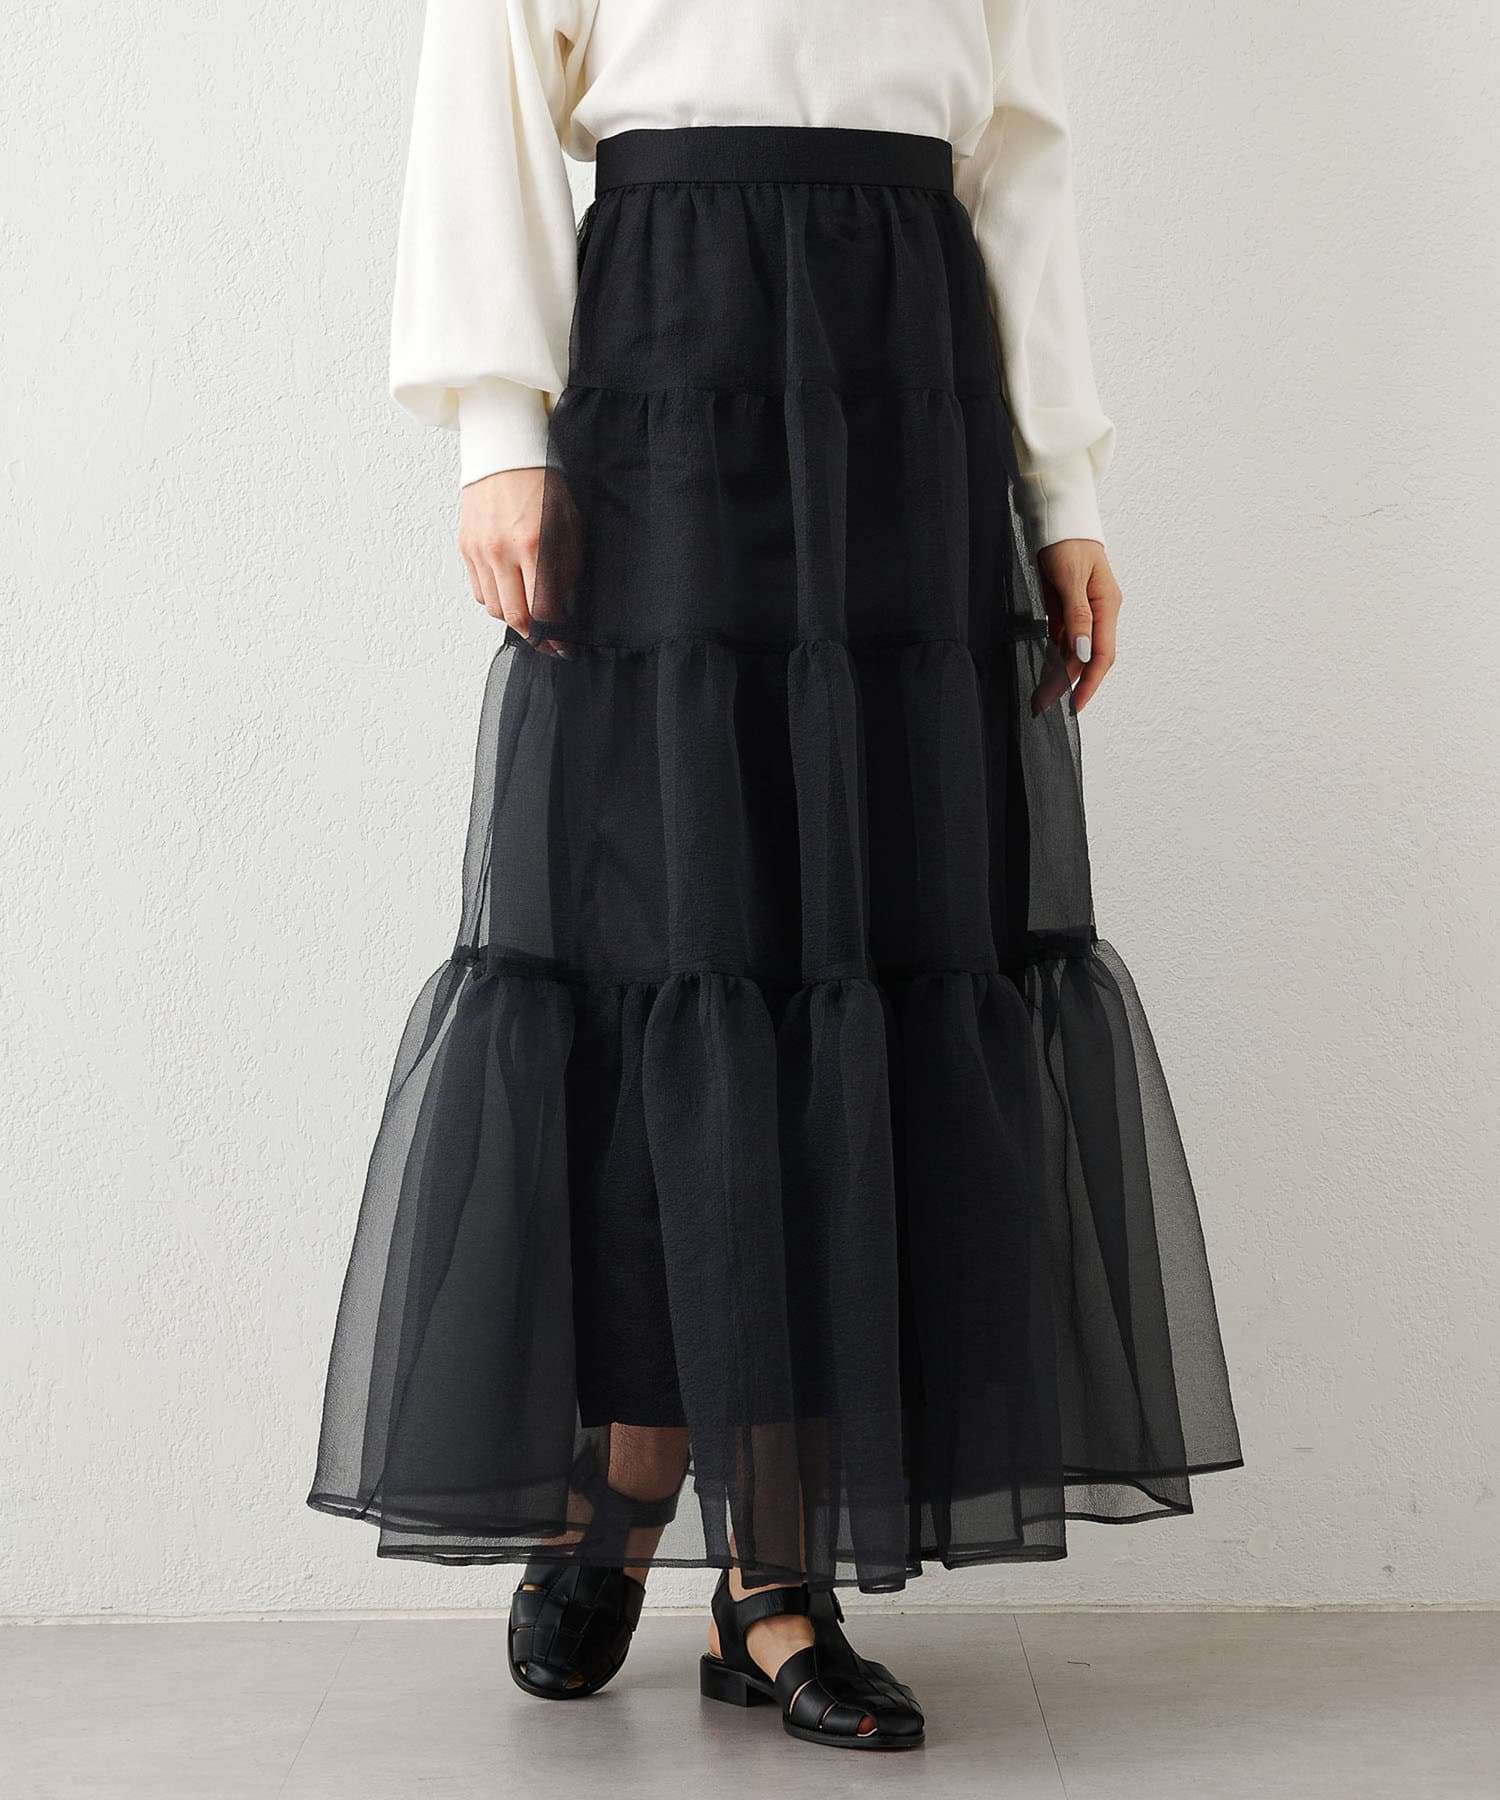 she Tokyo オーガンジードットスカート 34サイズ - スカート